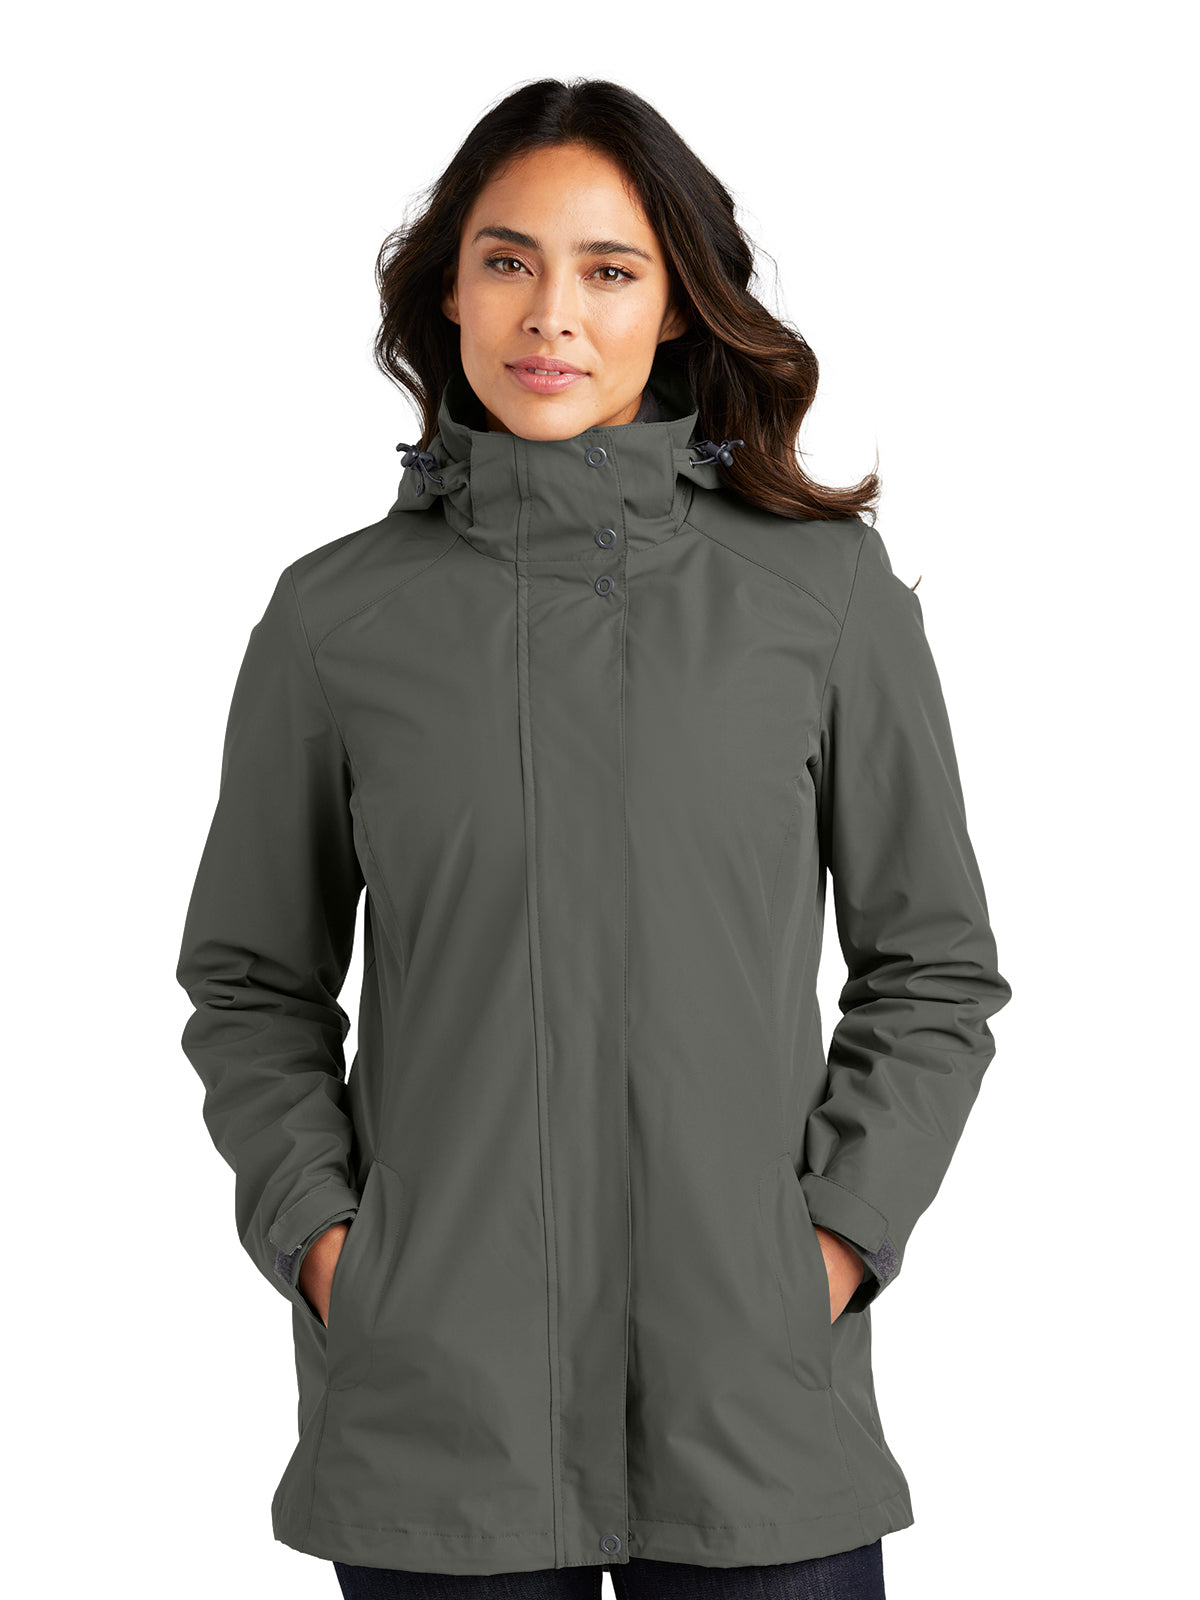 Women's 2-Pocket All-Weather Jacket